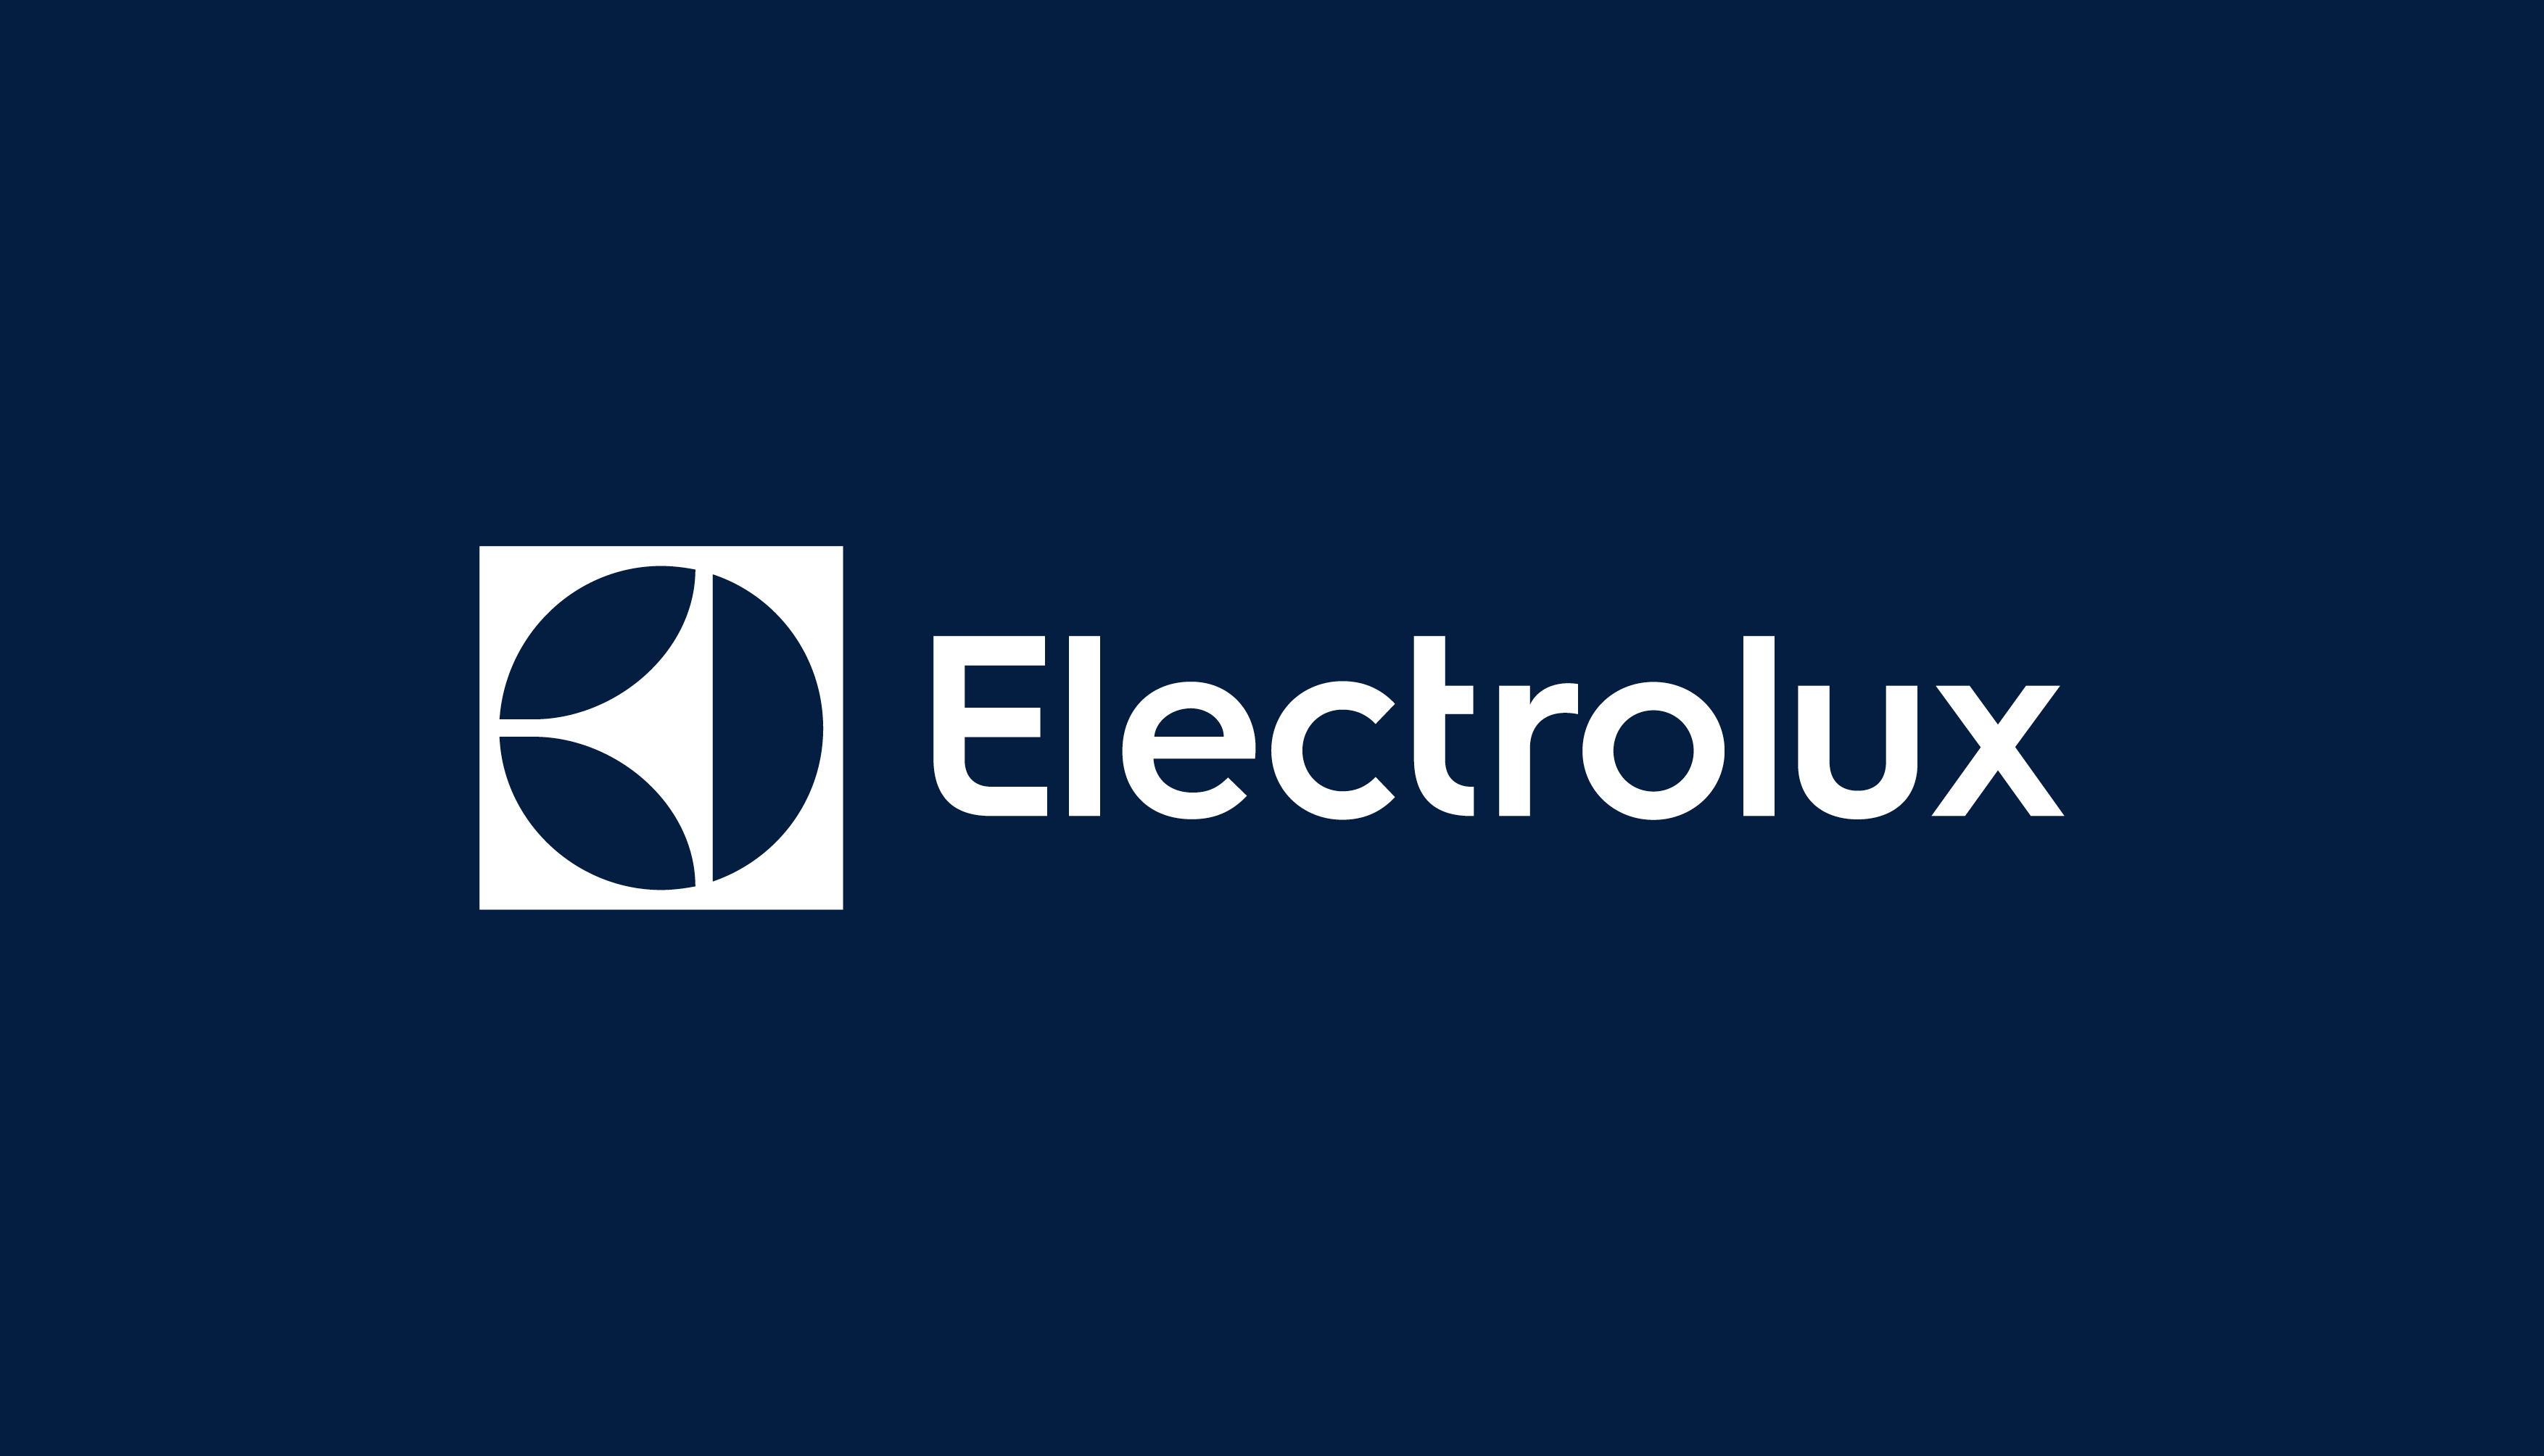 Trabalhe Conosco Electrolux 2018